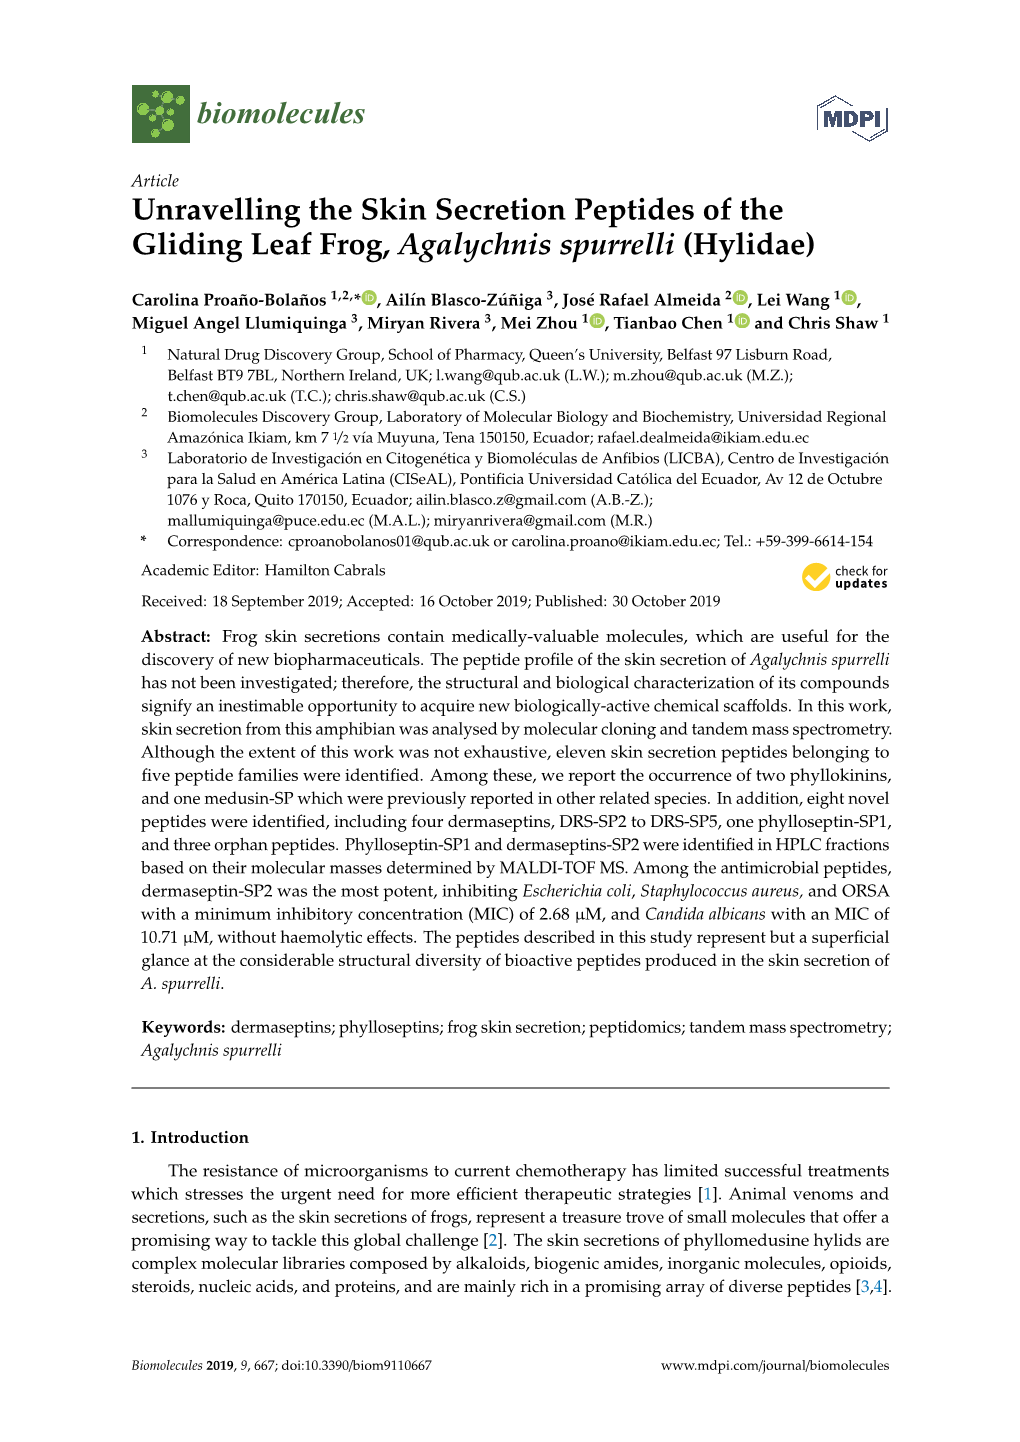 Unravelling the Skin Secretion Peptides of the Gliding Leaf Frog, Agalychnis Spurrelli (Hylidae)